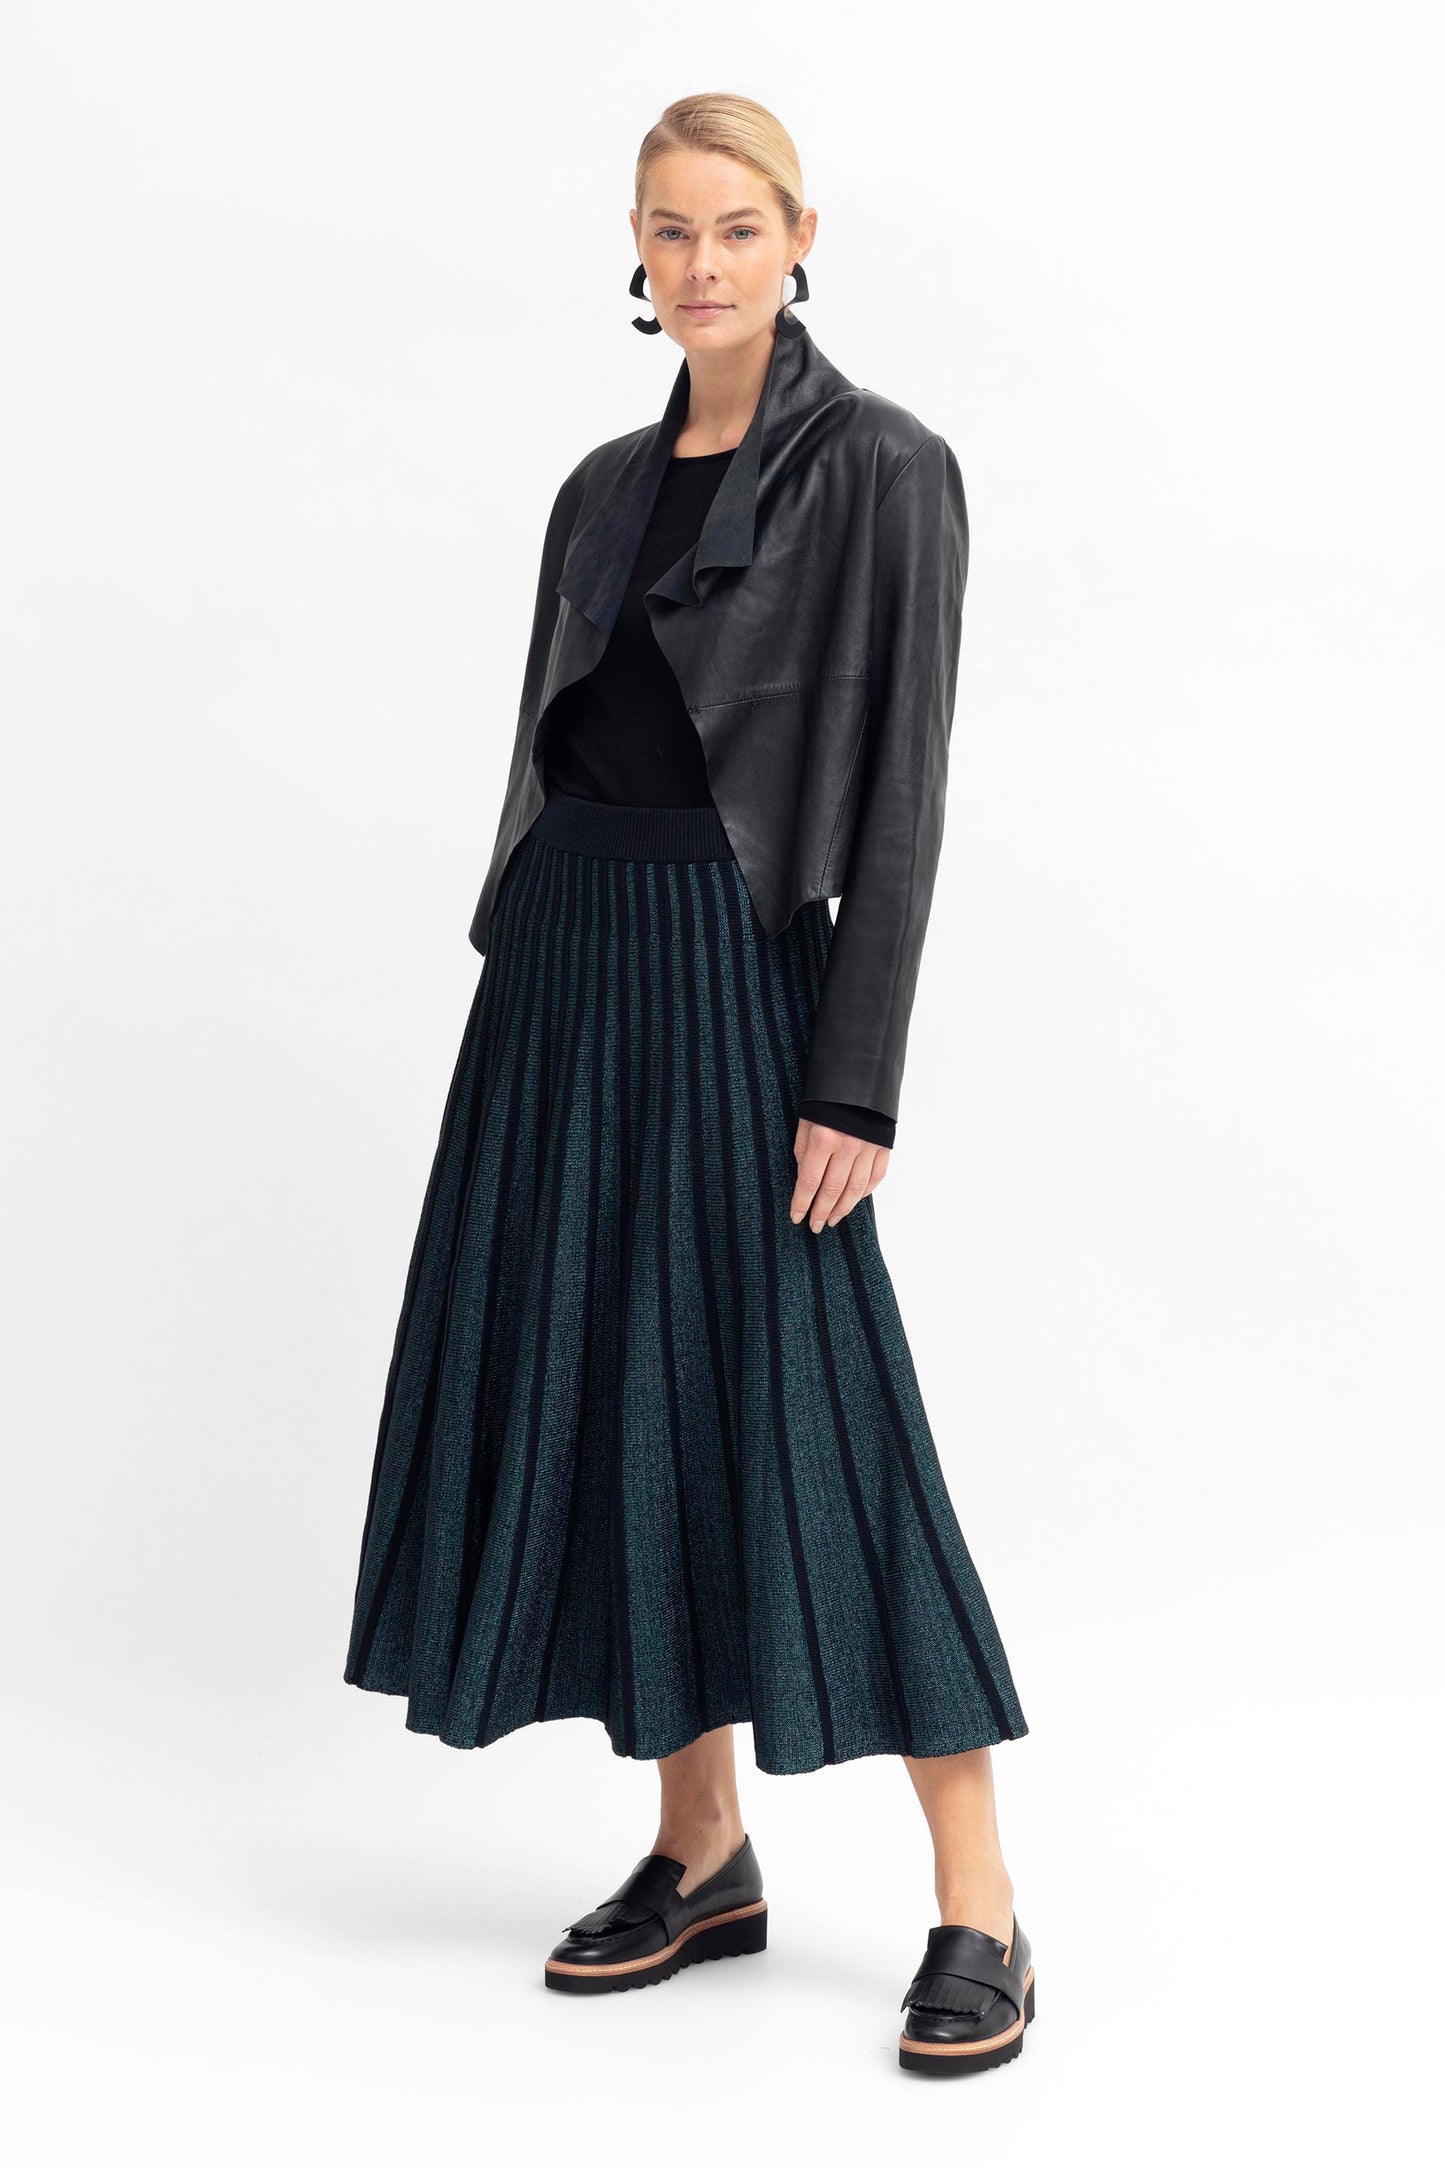 Glittra Lurex Knit Metallic A-Line Skirt Model Front Full Body | TEAL METALLIC